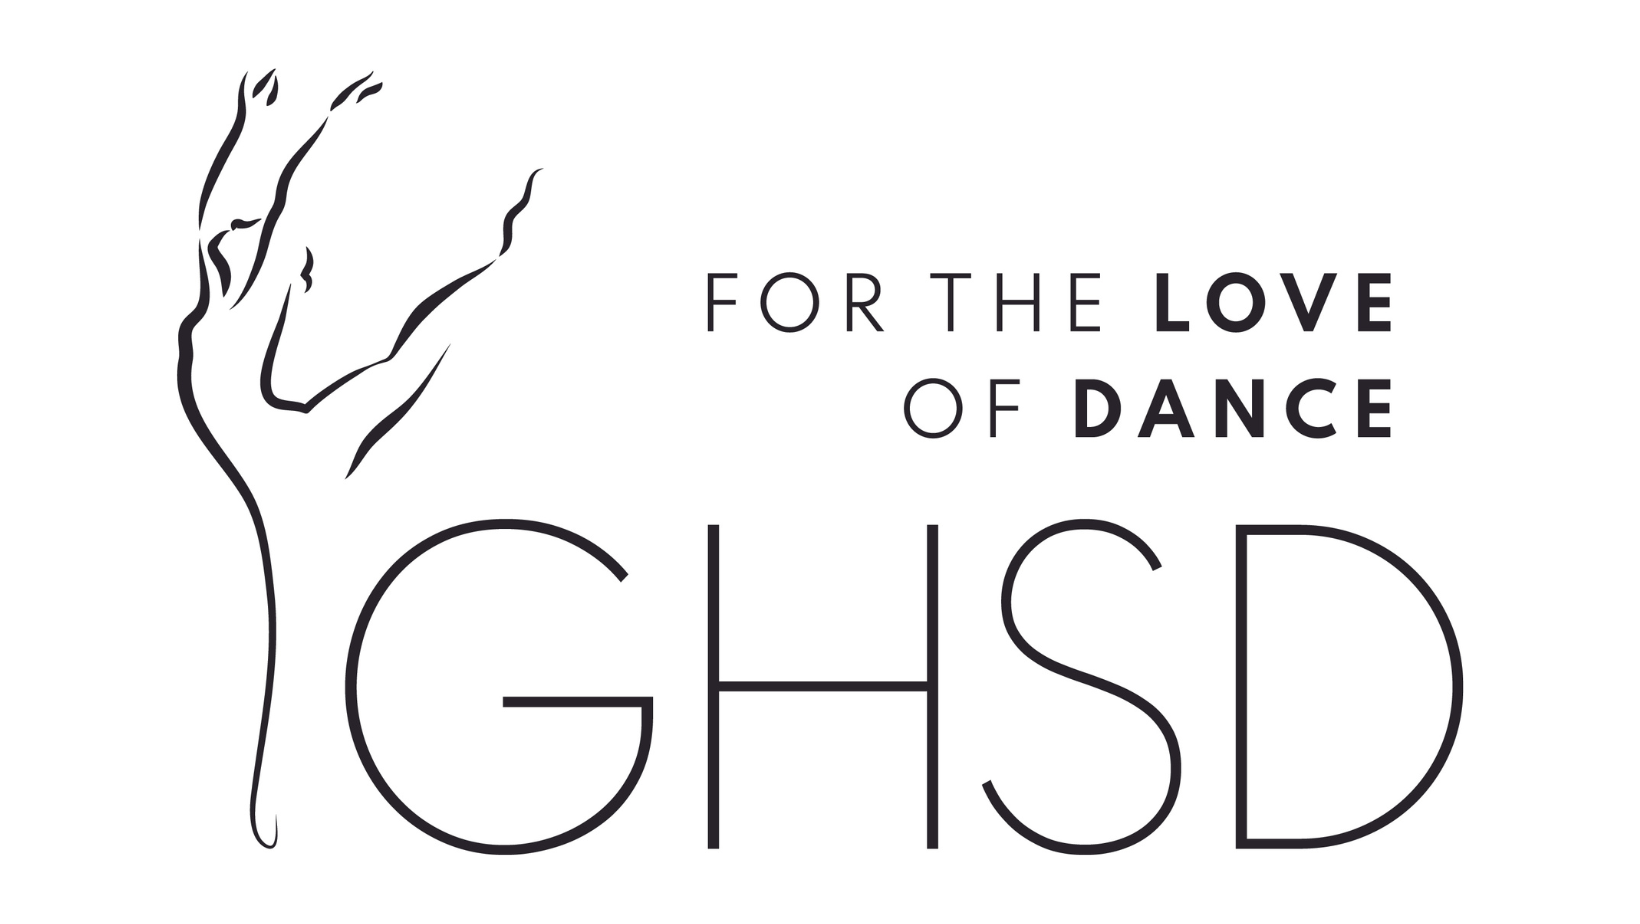 The Gwyneth Hare School Of Dancing